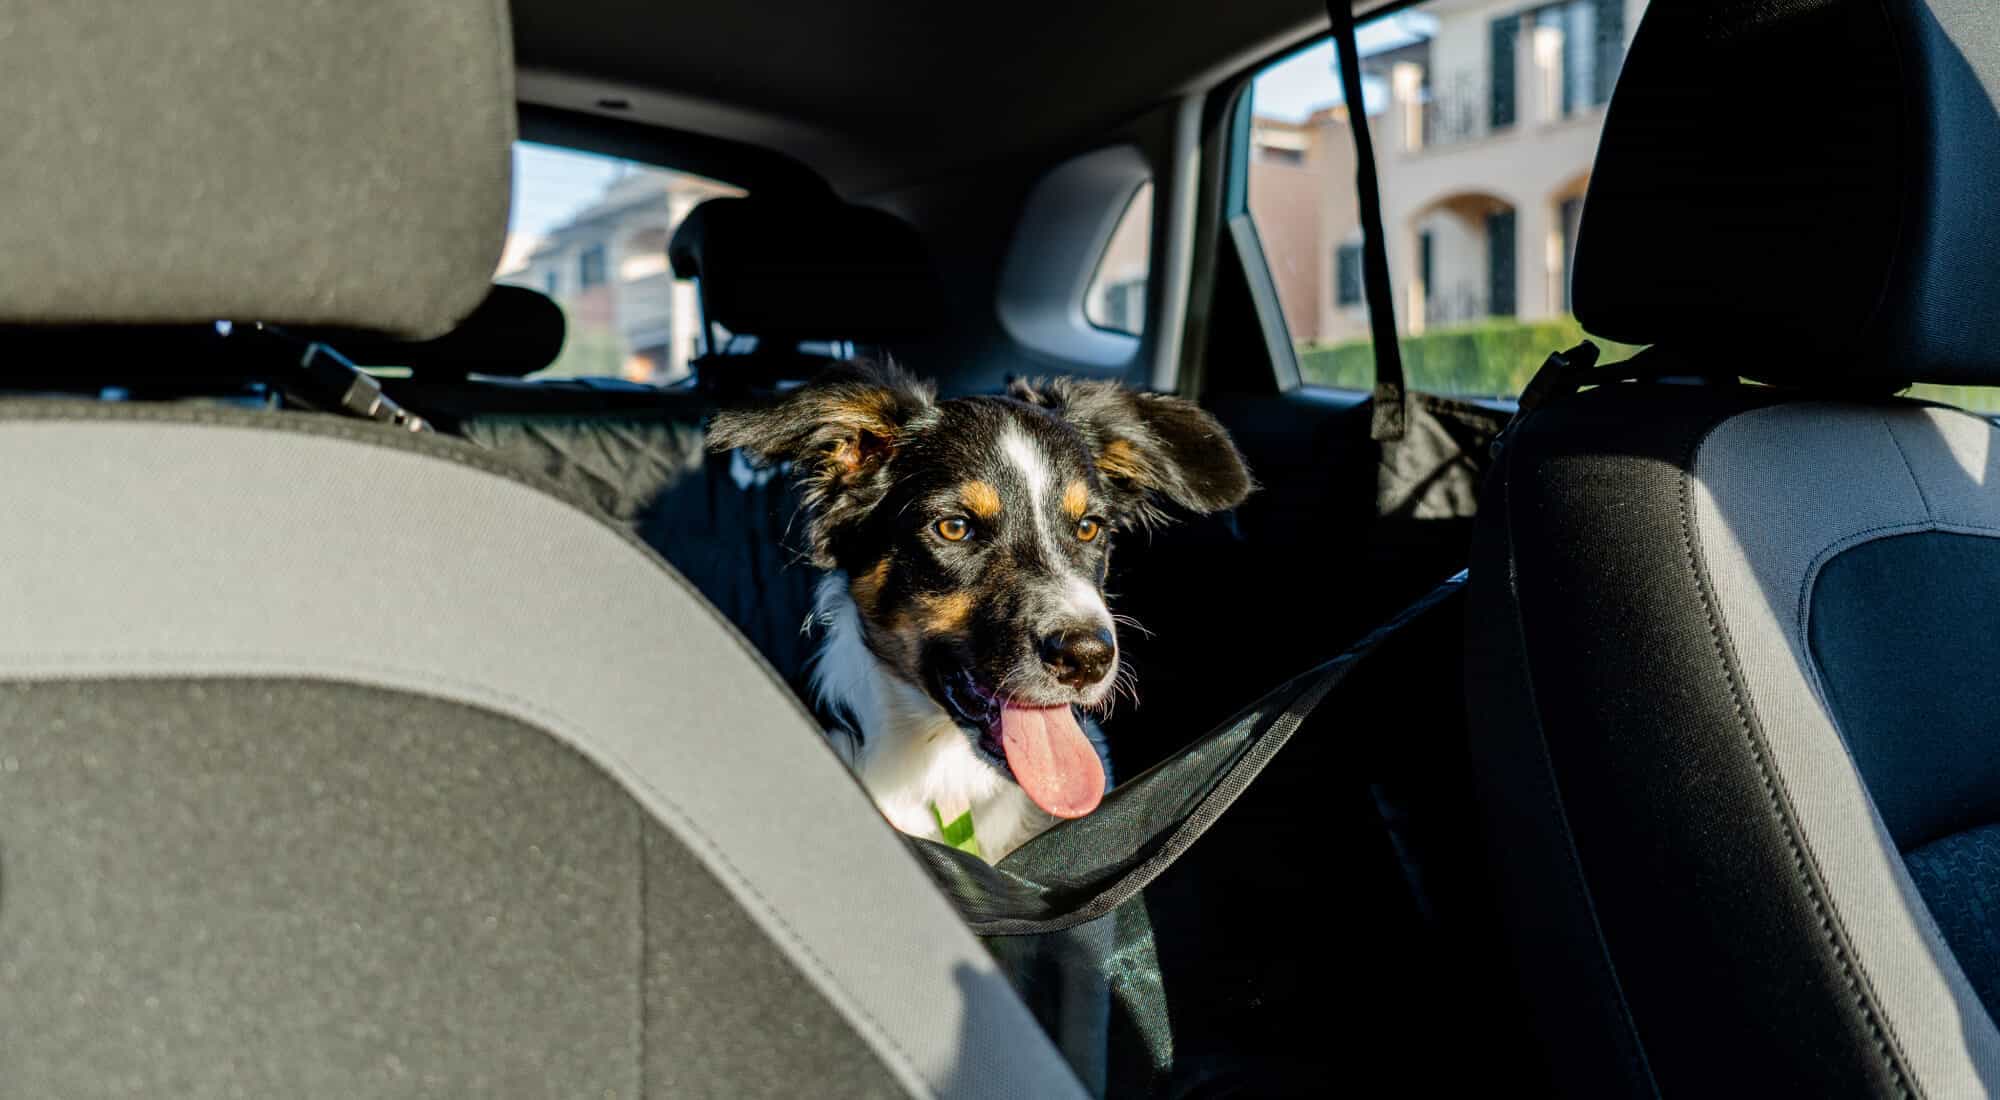 A dog sitting in a car backseat